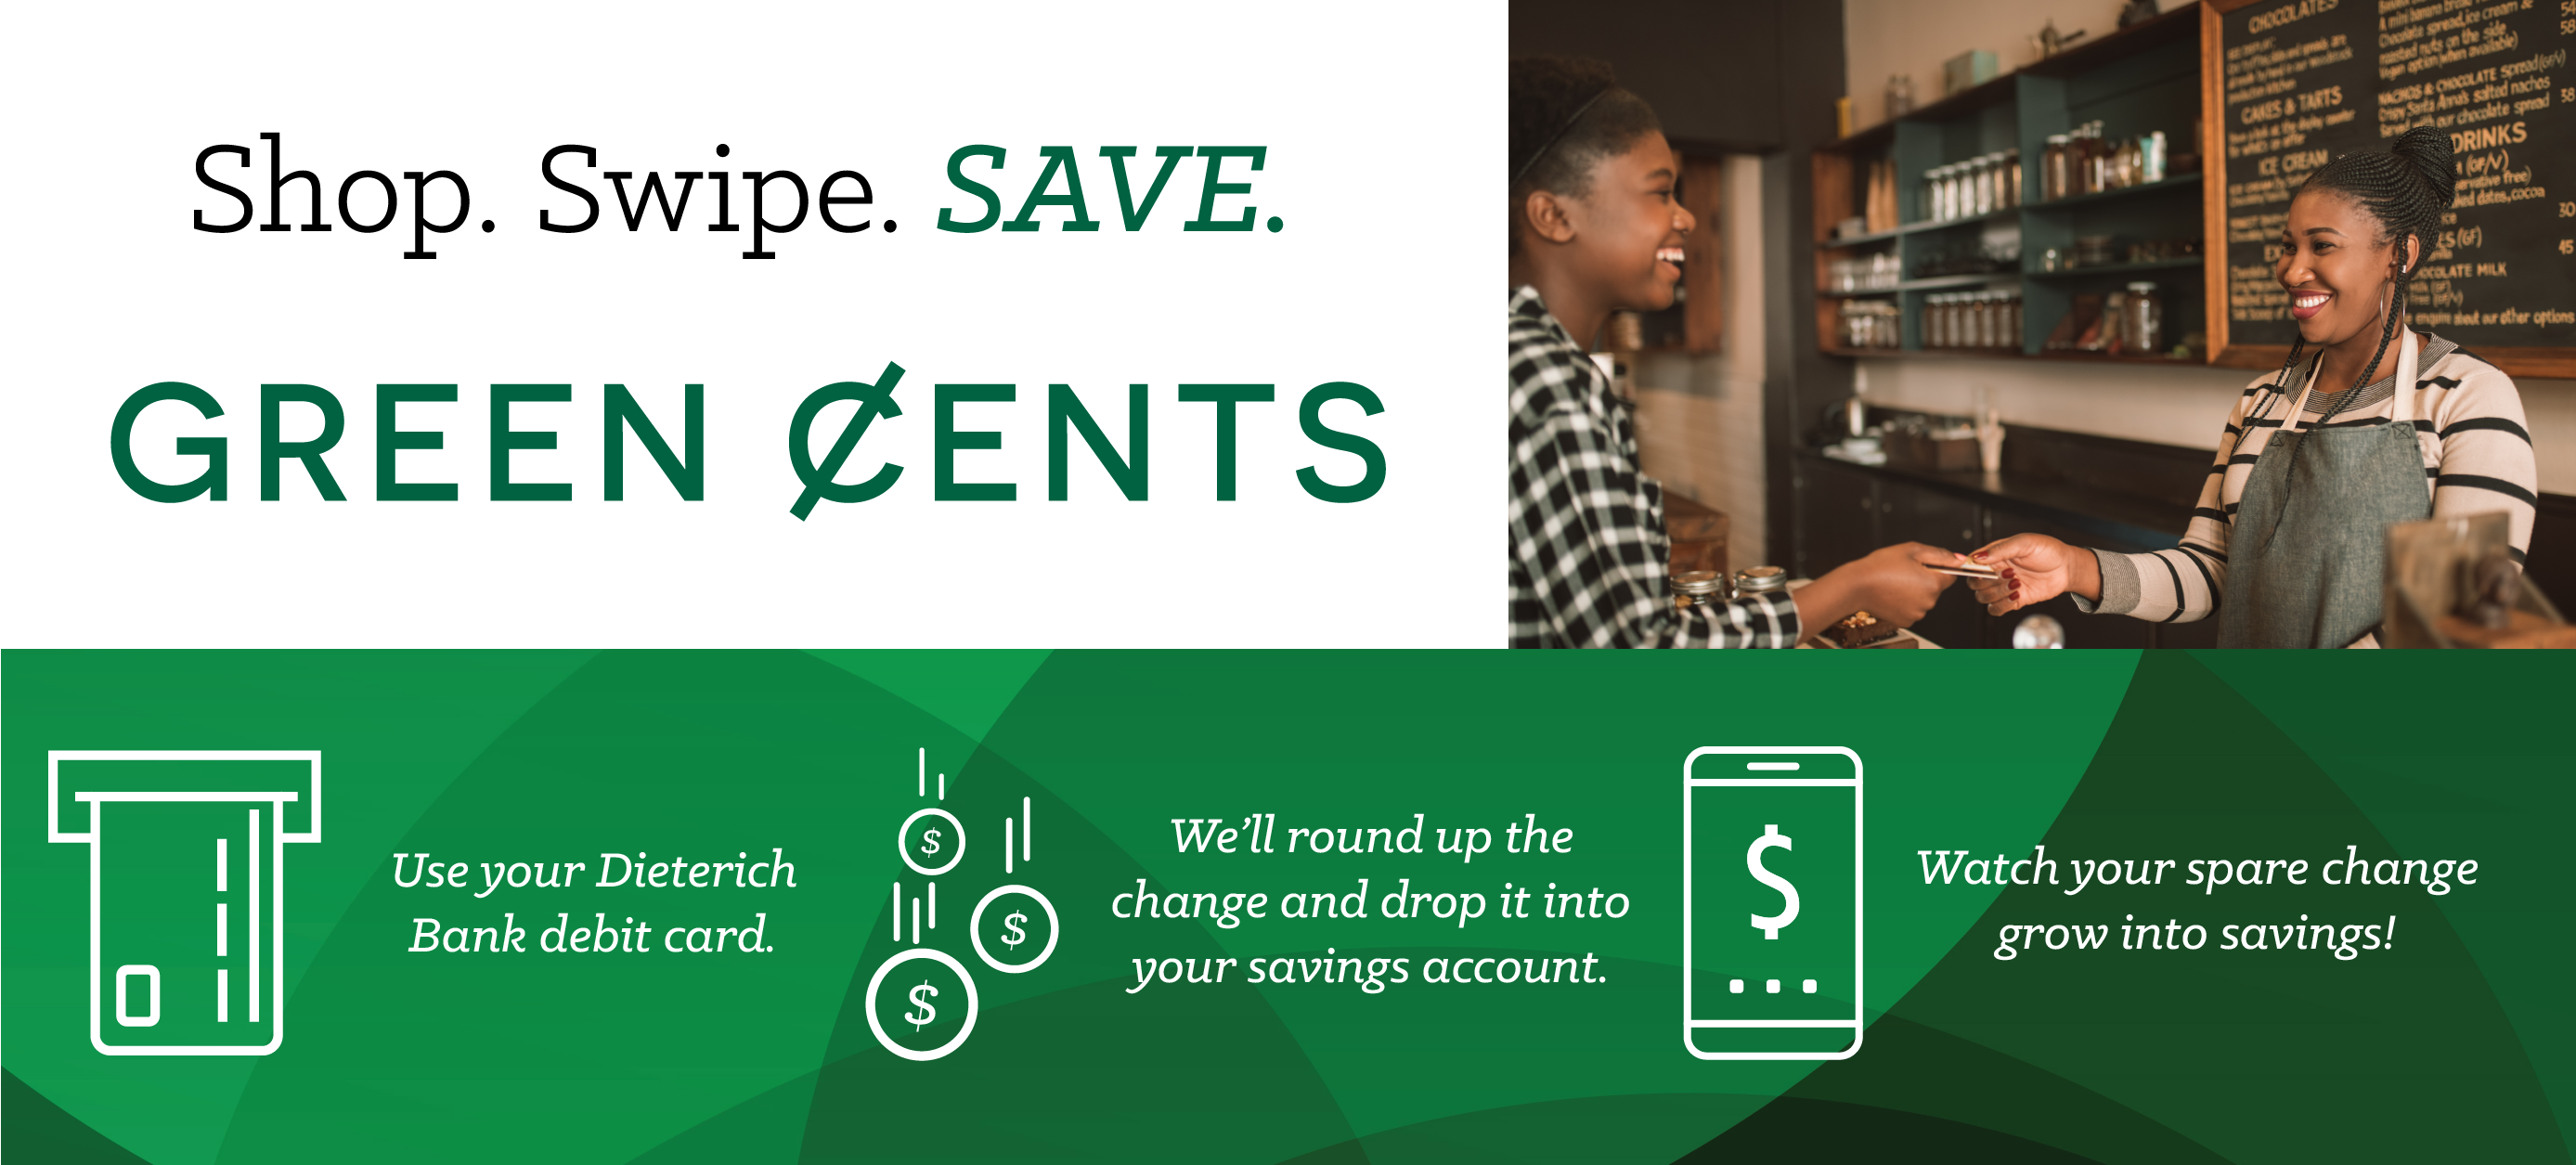 green cents savings image